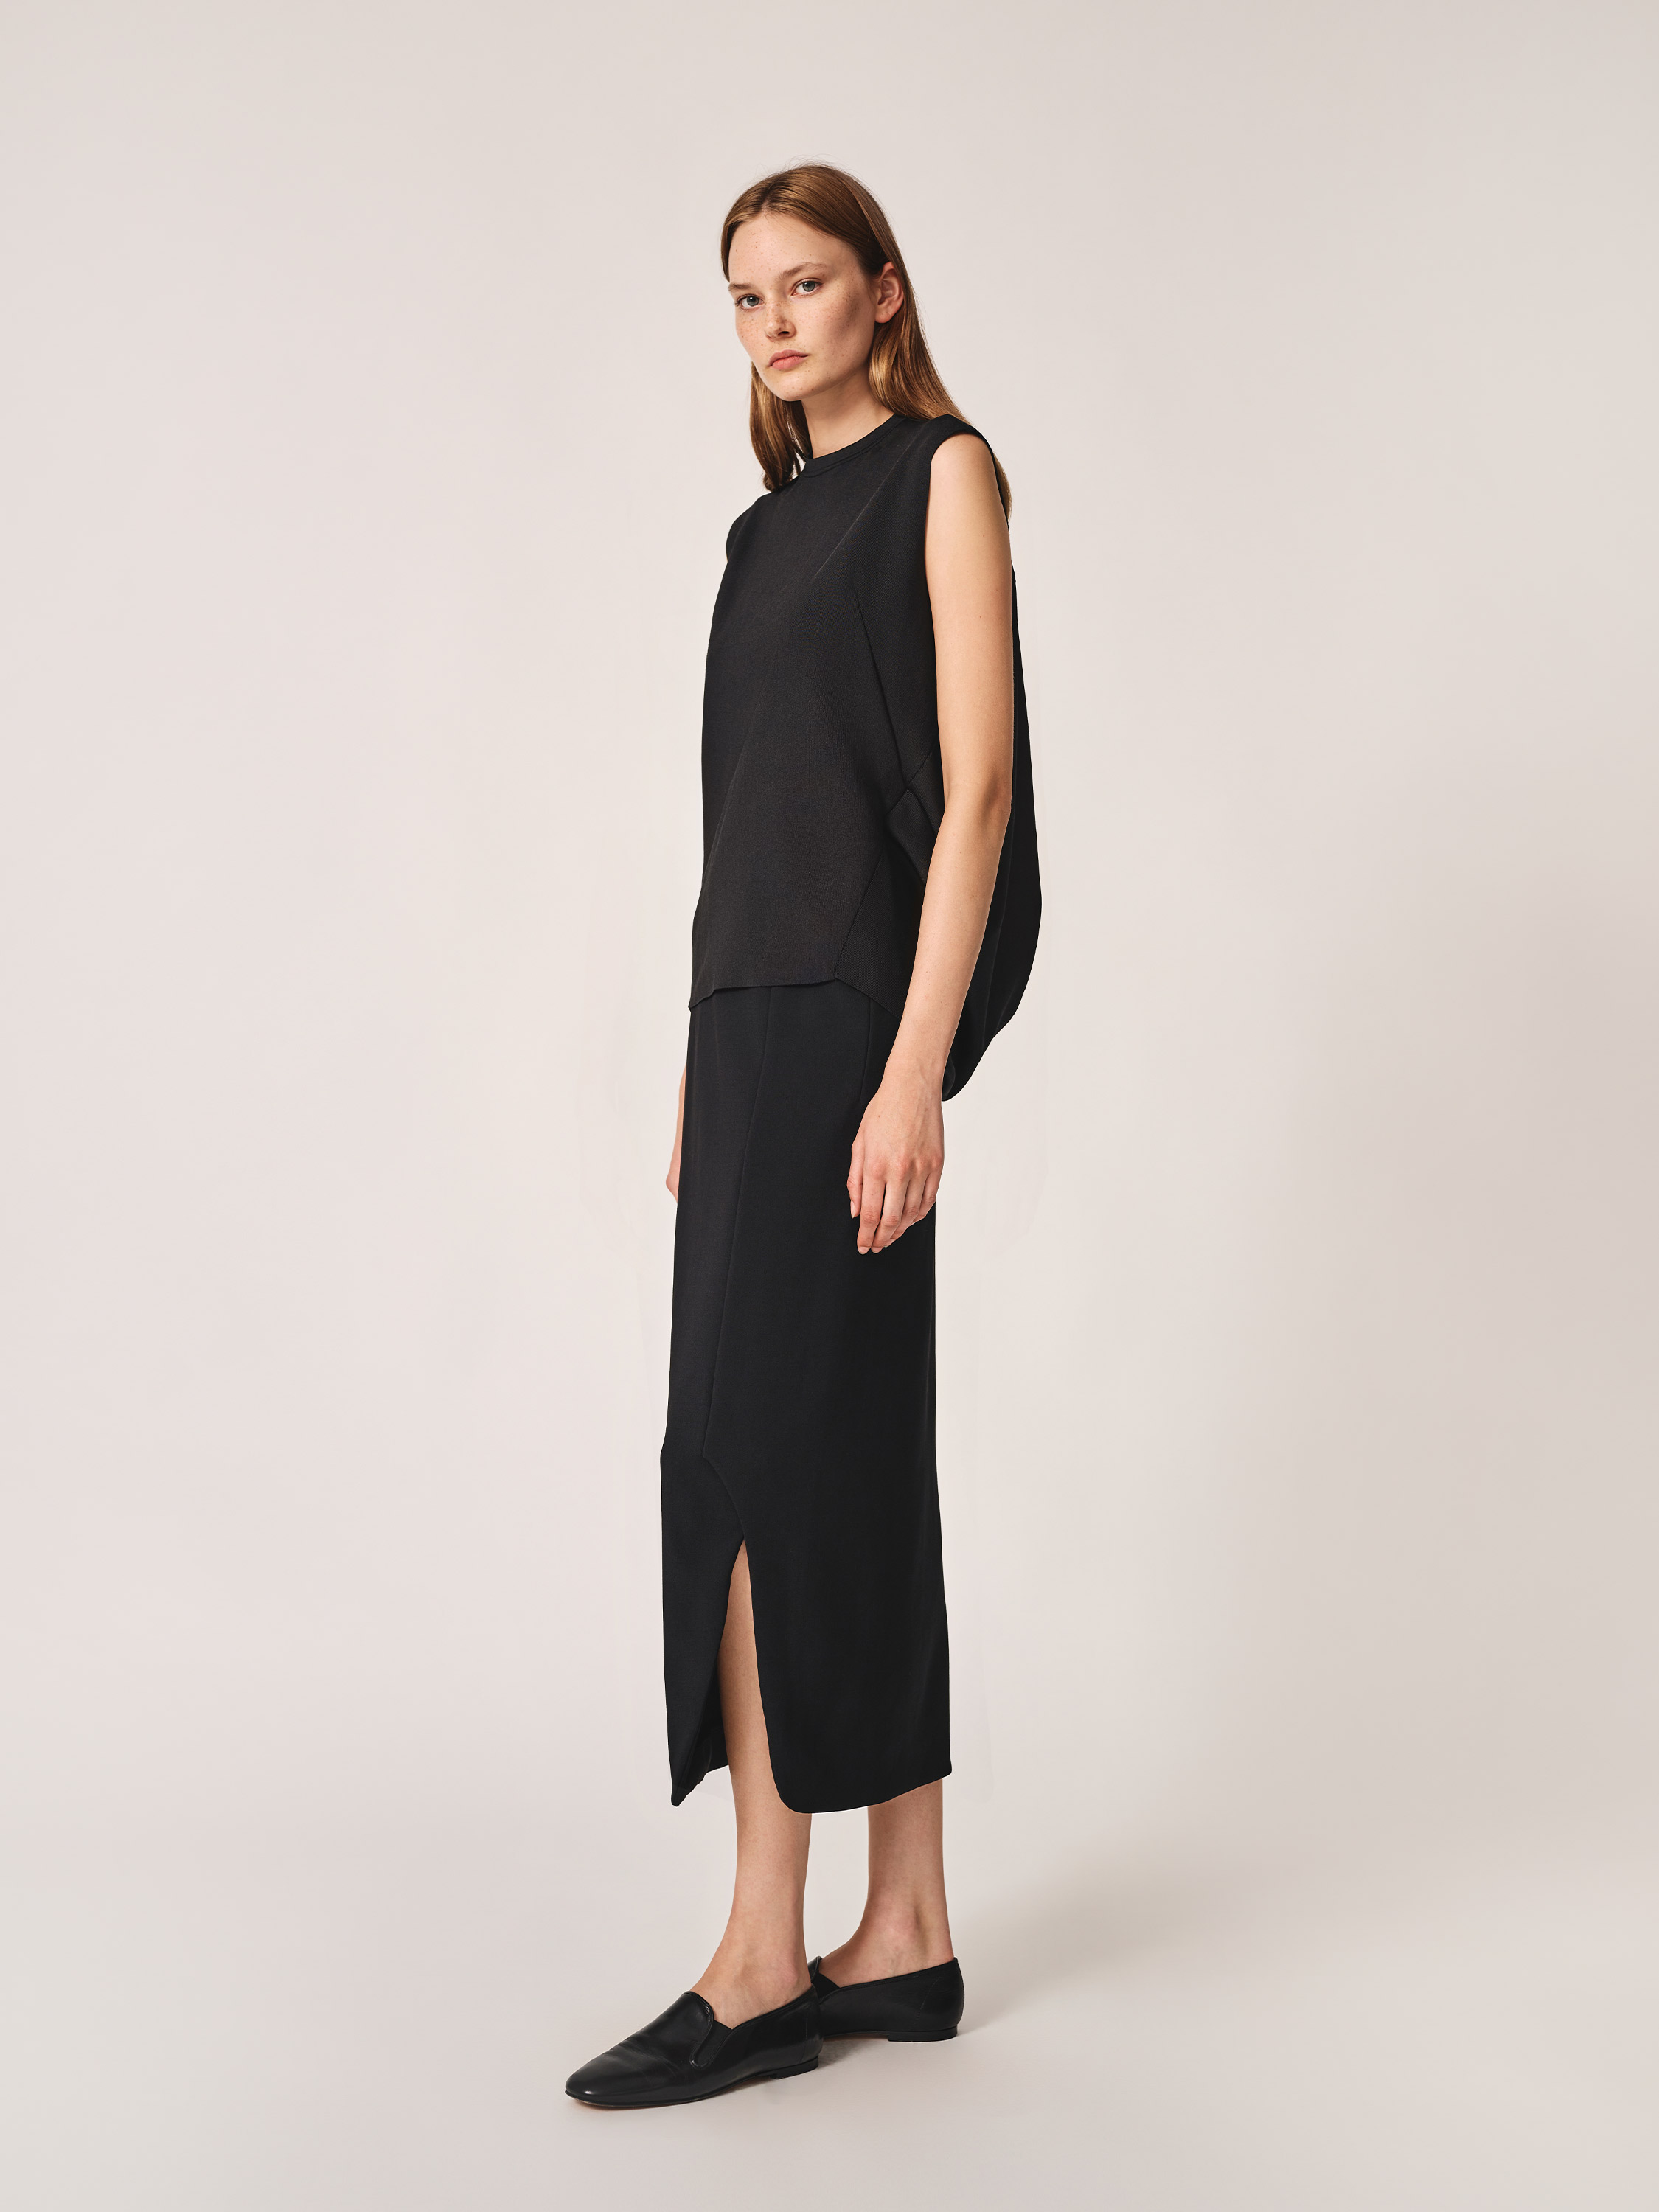 Long Black Pencil Skirt. Style FL223042 – PackersFashion